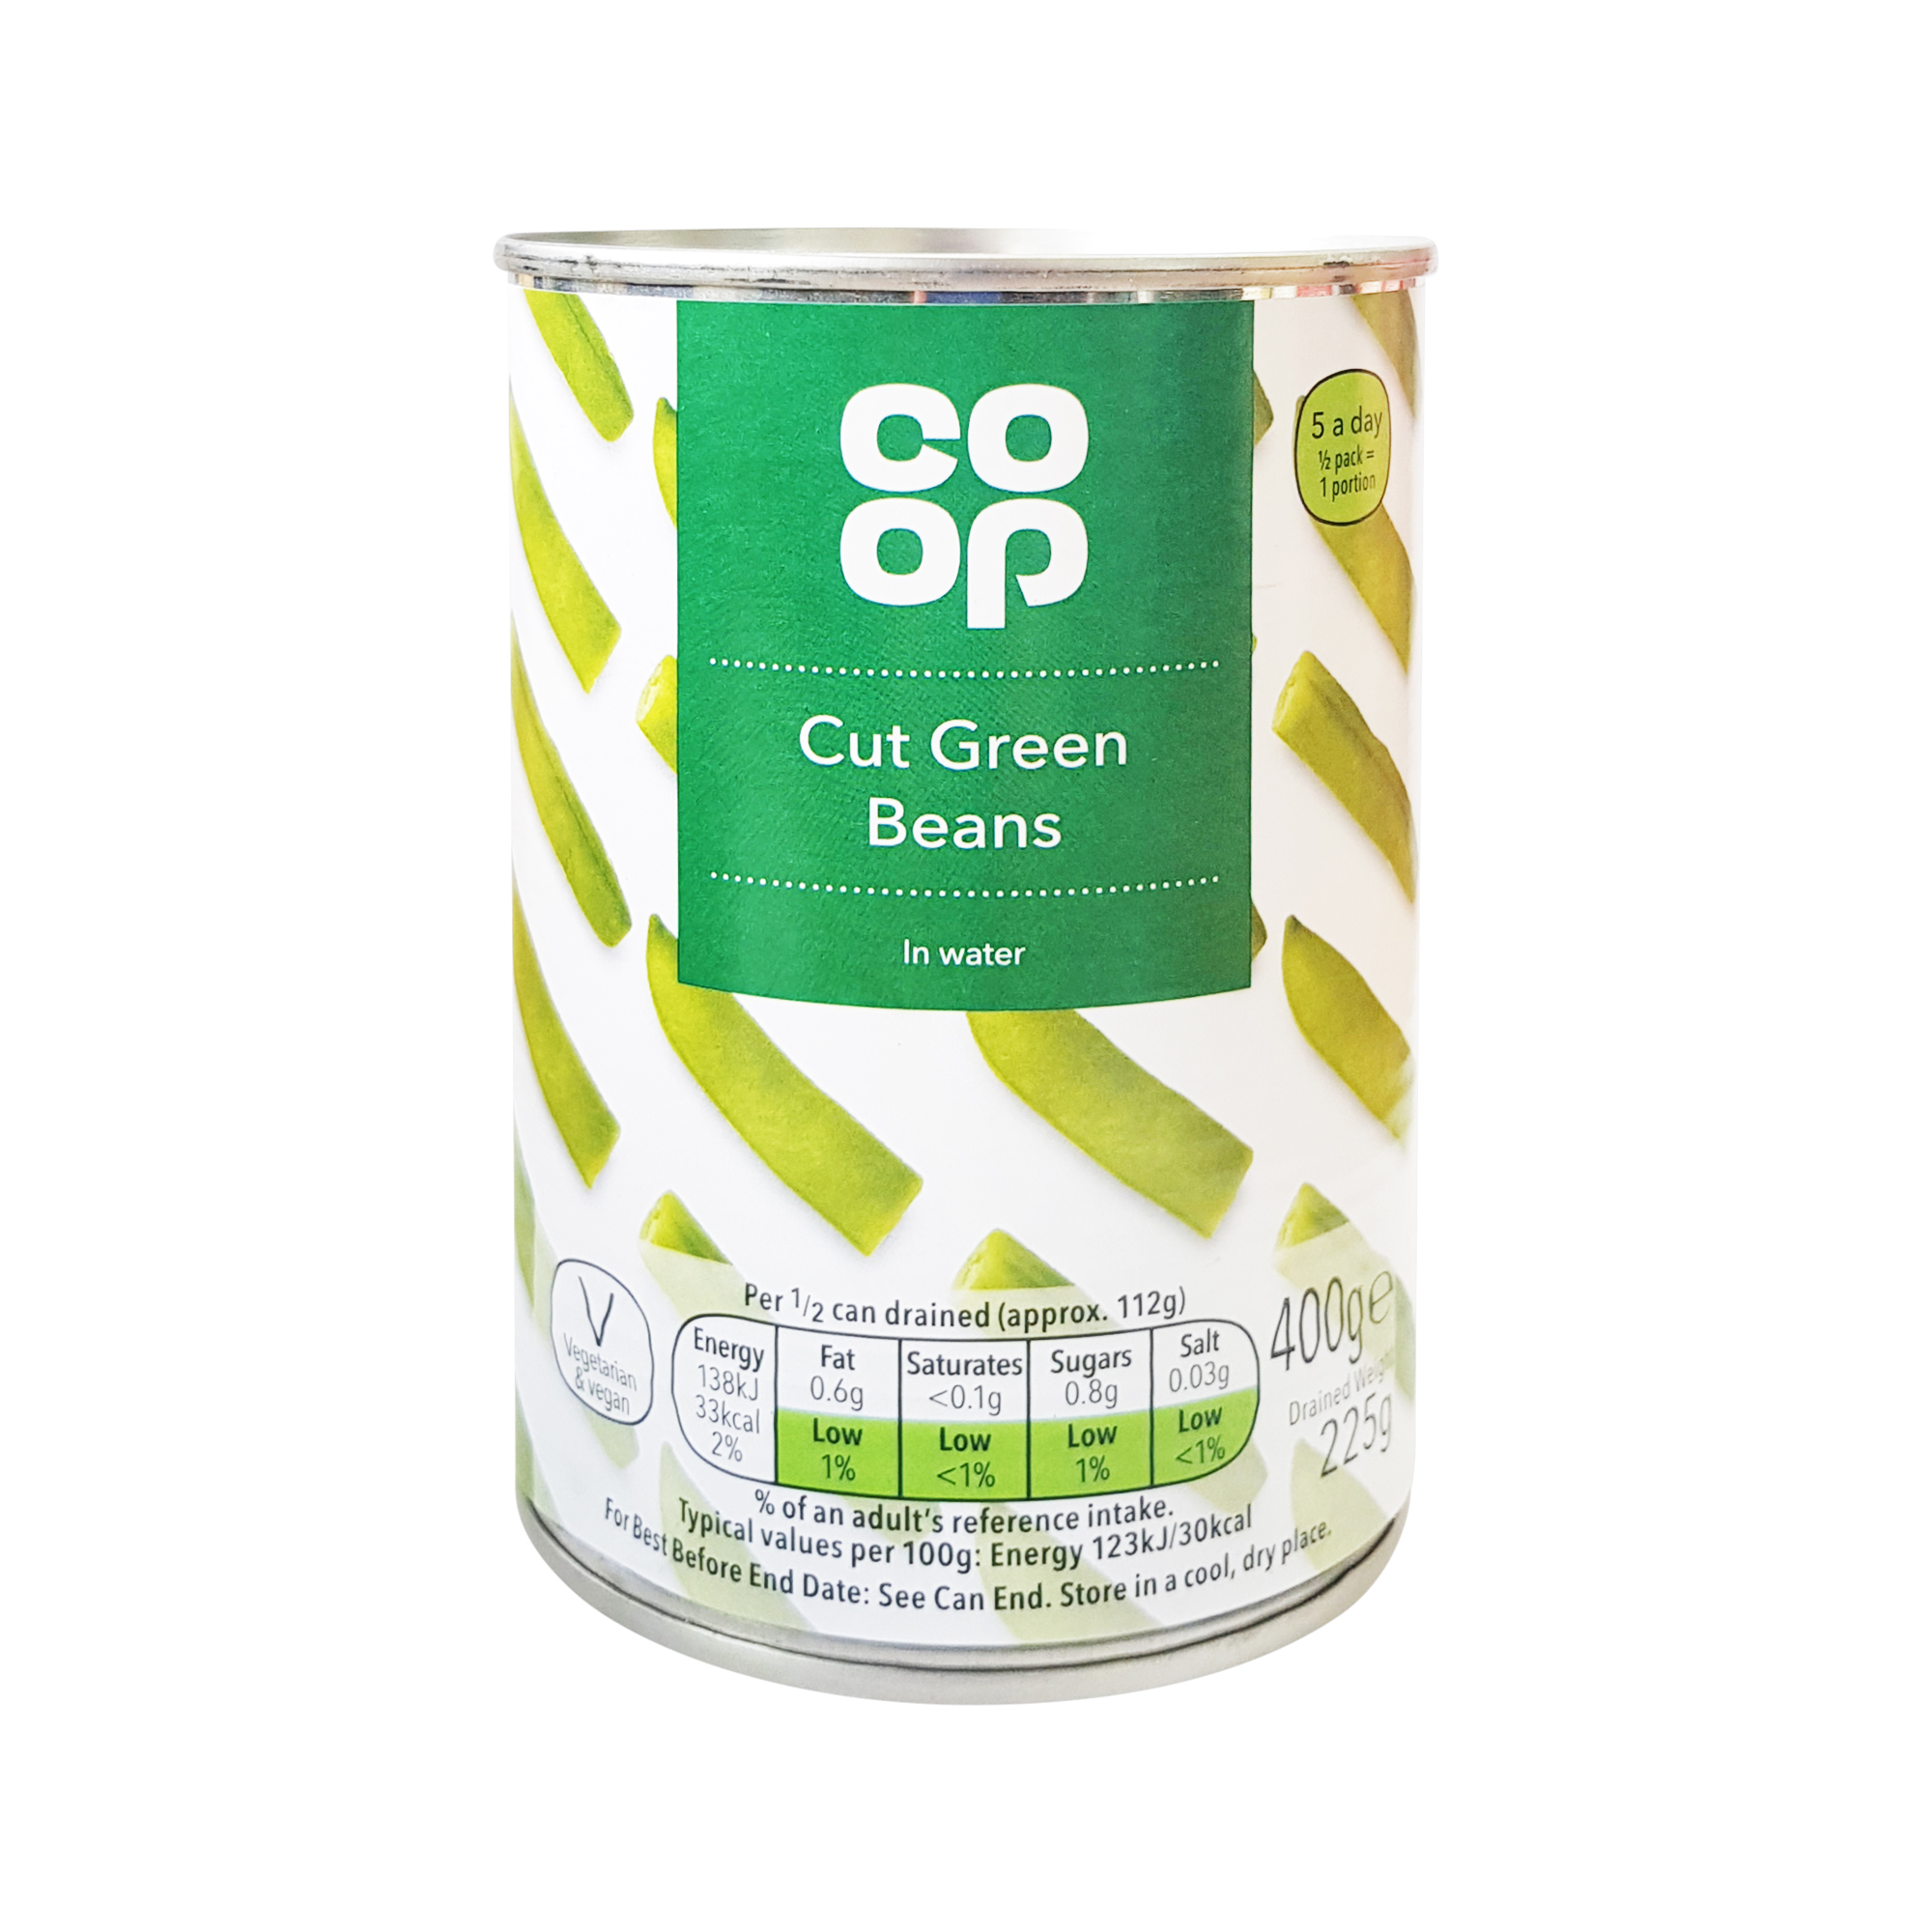 Co Op Cut Green Beans in Water (400g)